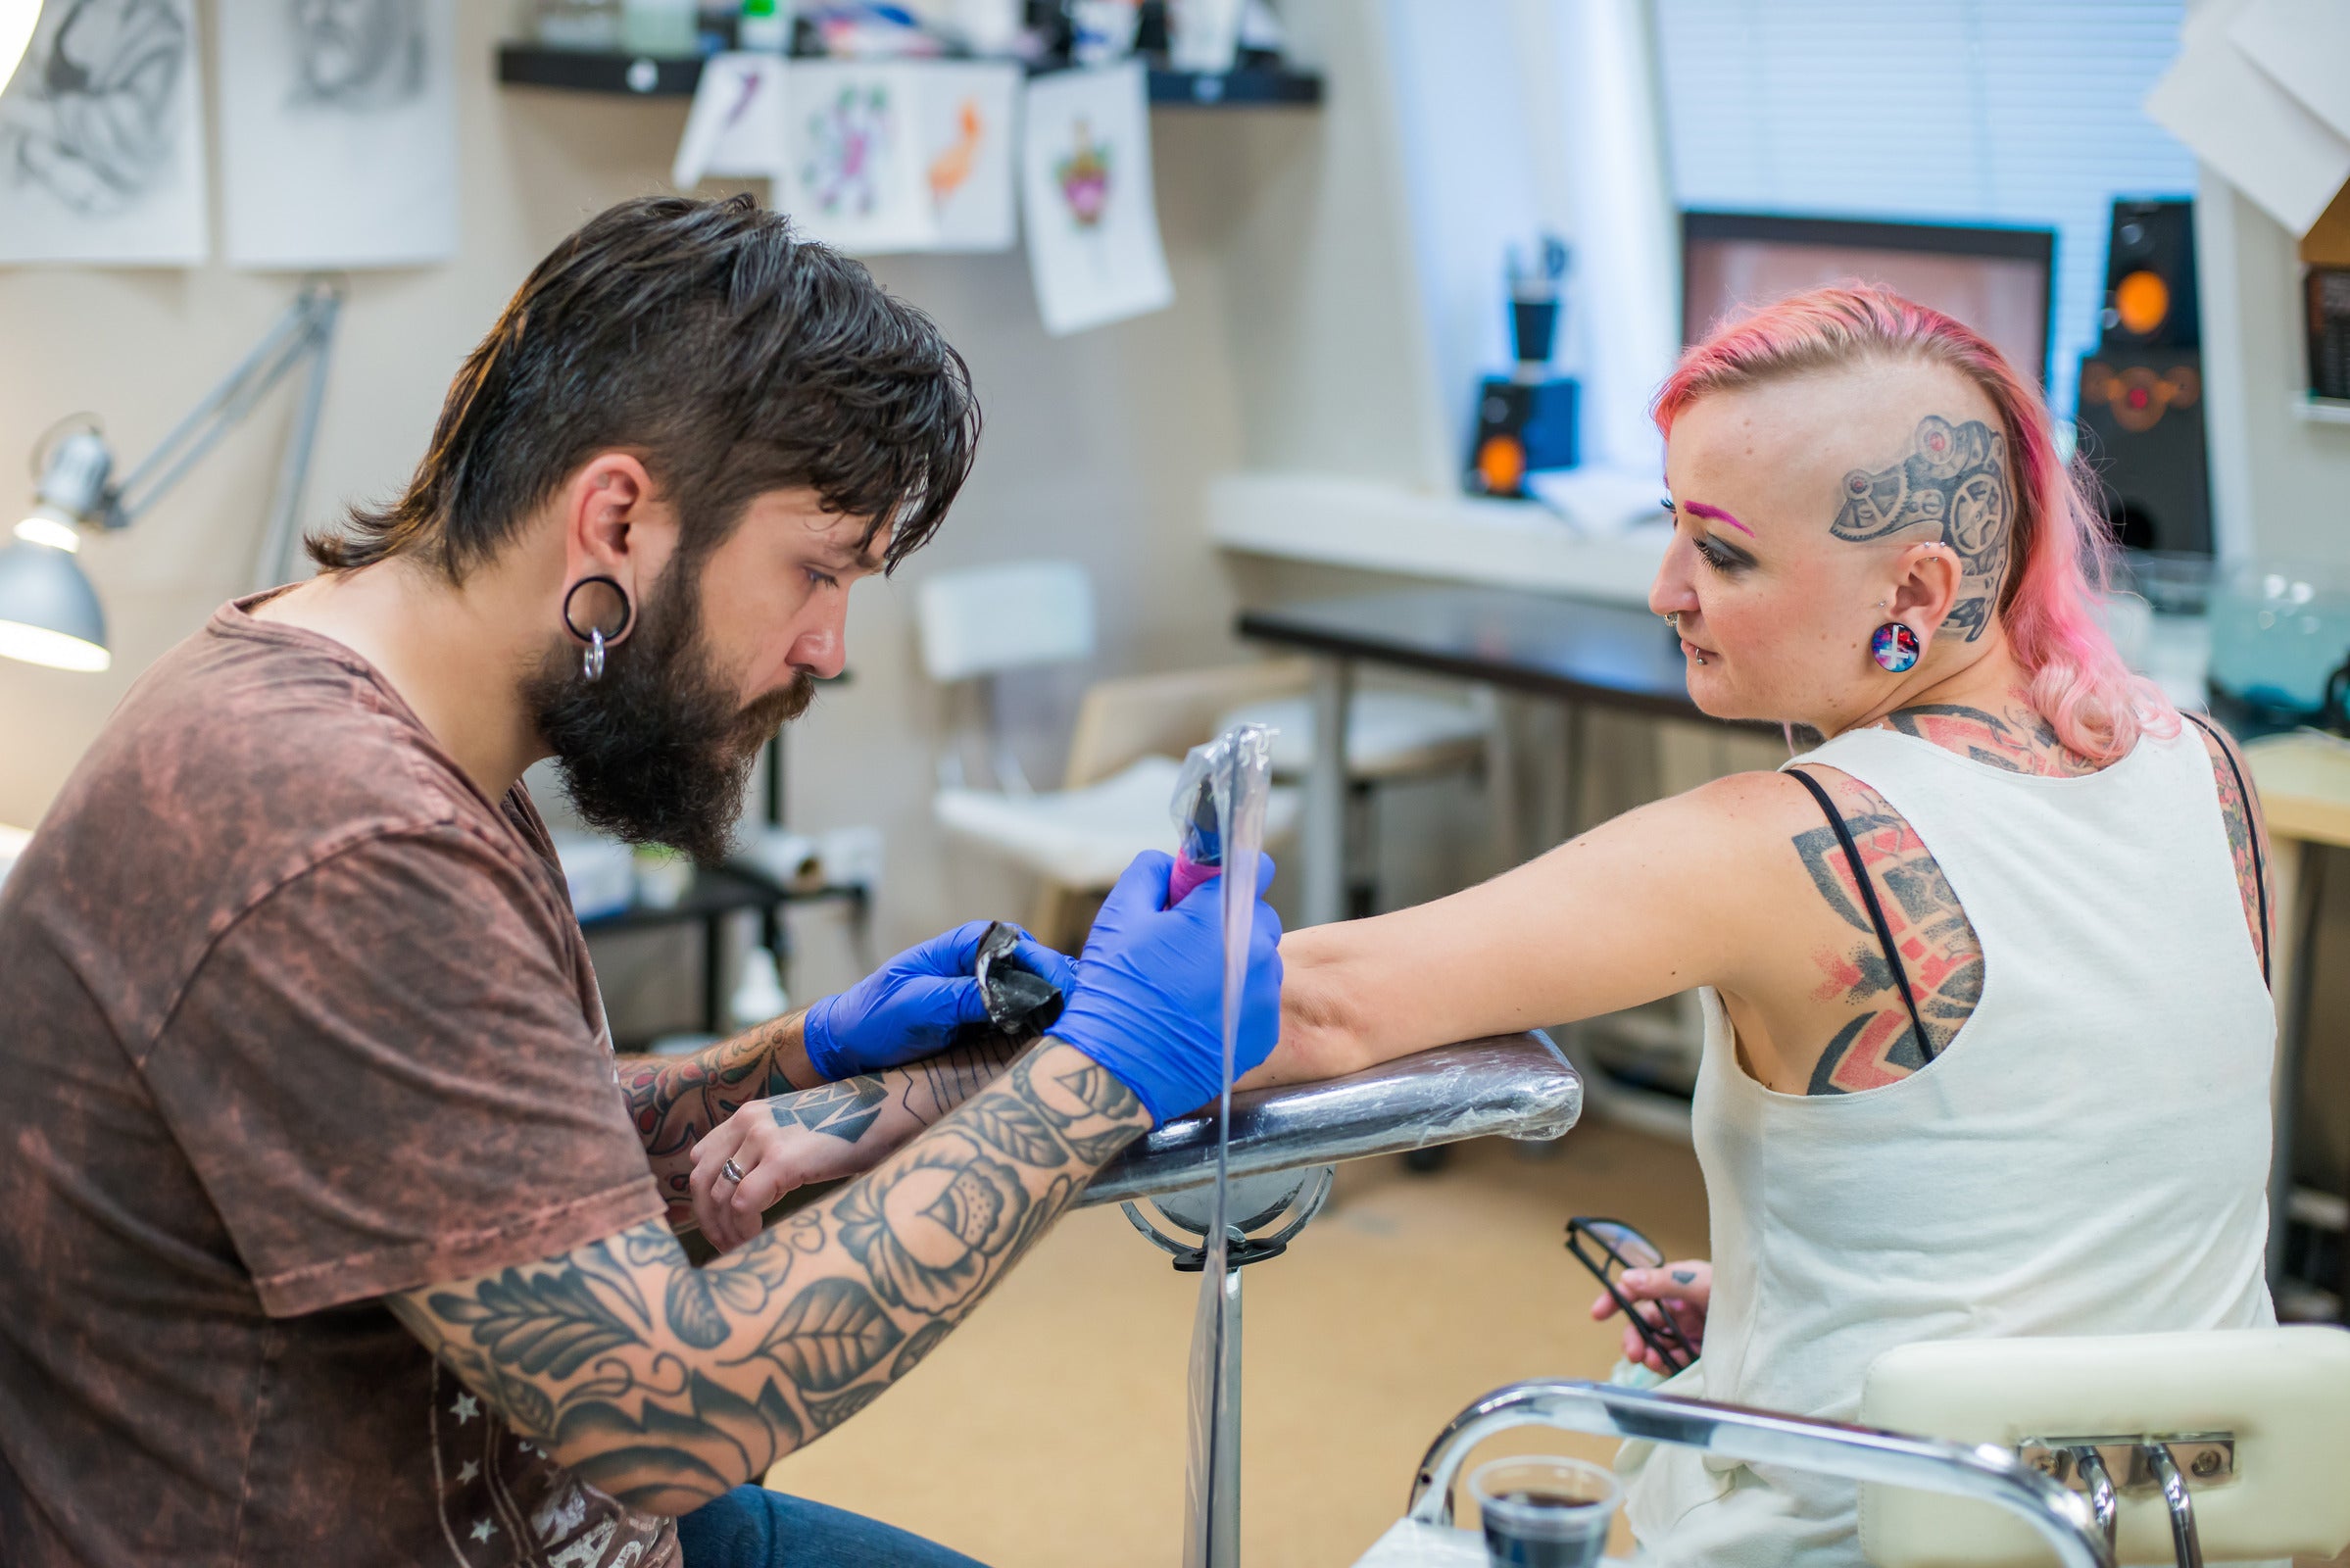 Tattoo parlor regulations